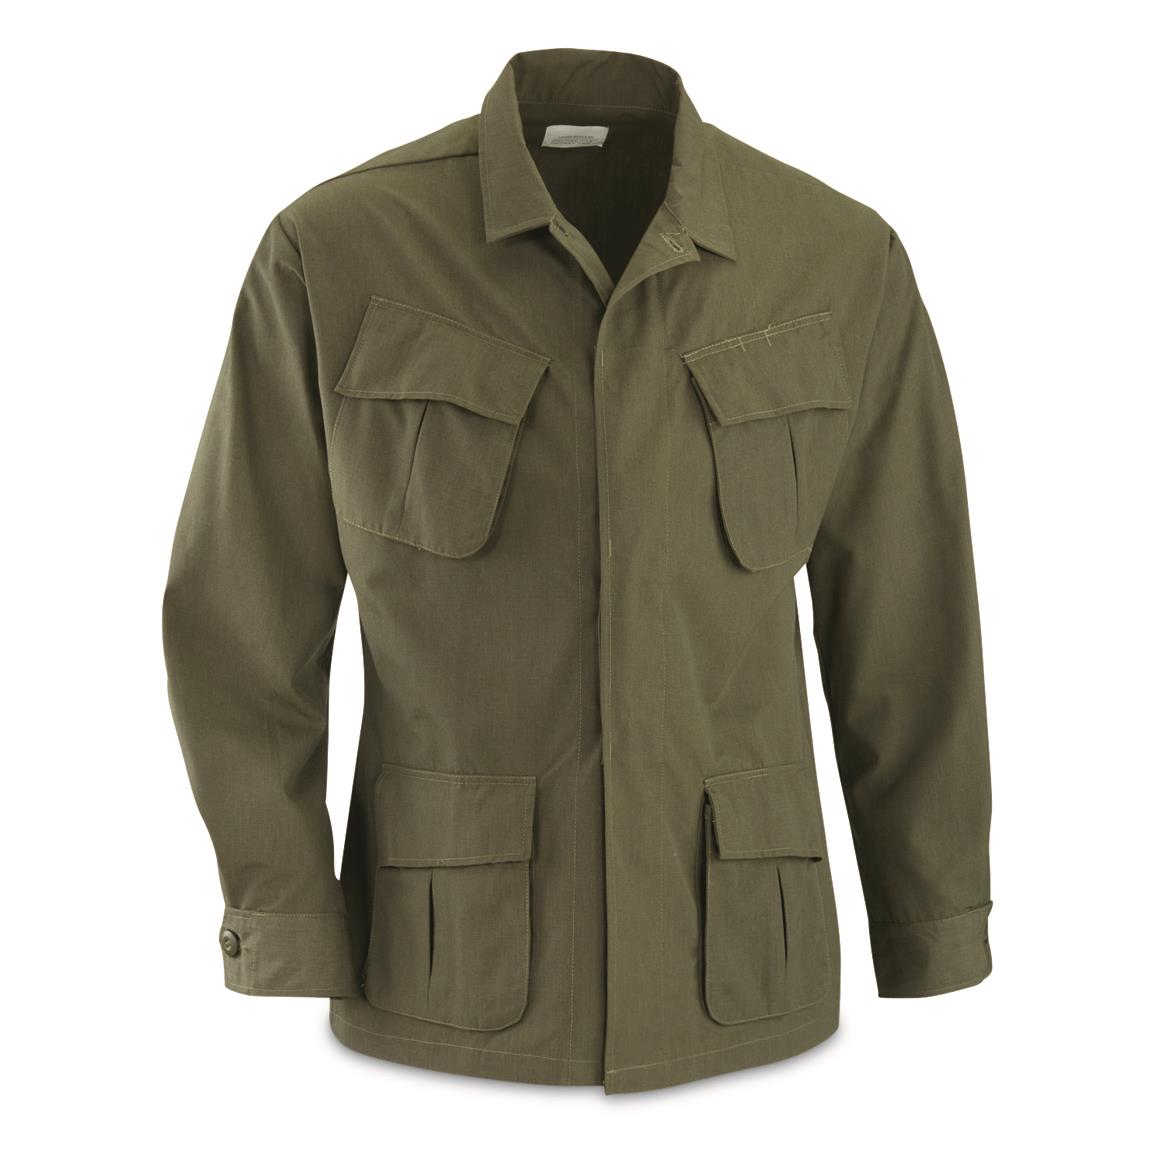 Brooklyn Armed Forces U.S. Military Style Vietnam Era BDU Jacket, Olive Drab